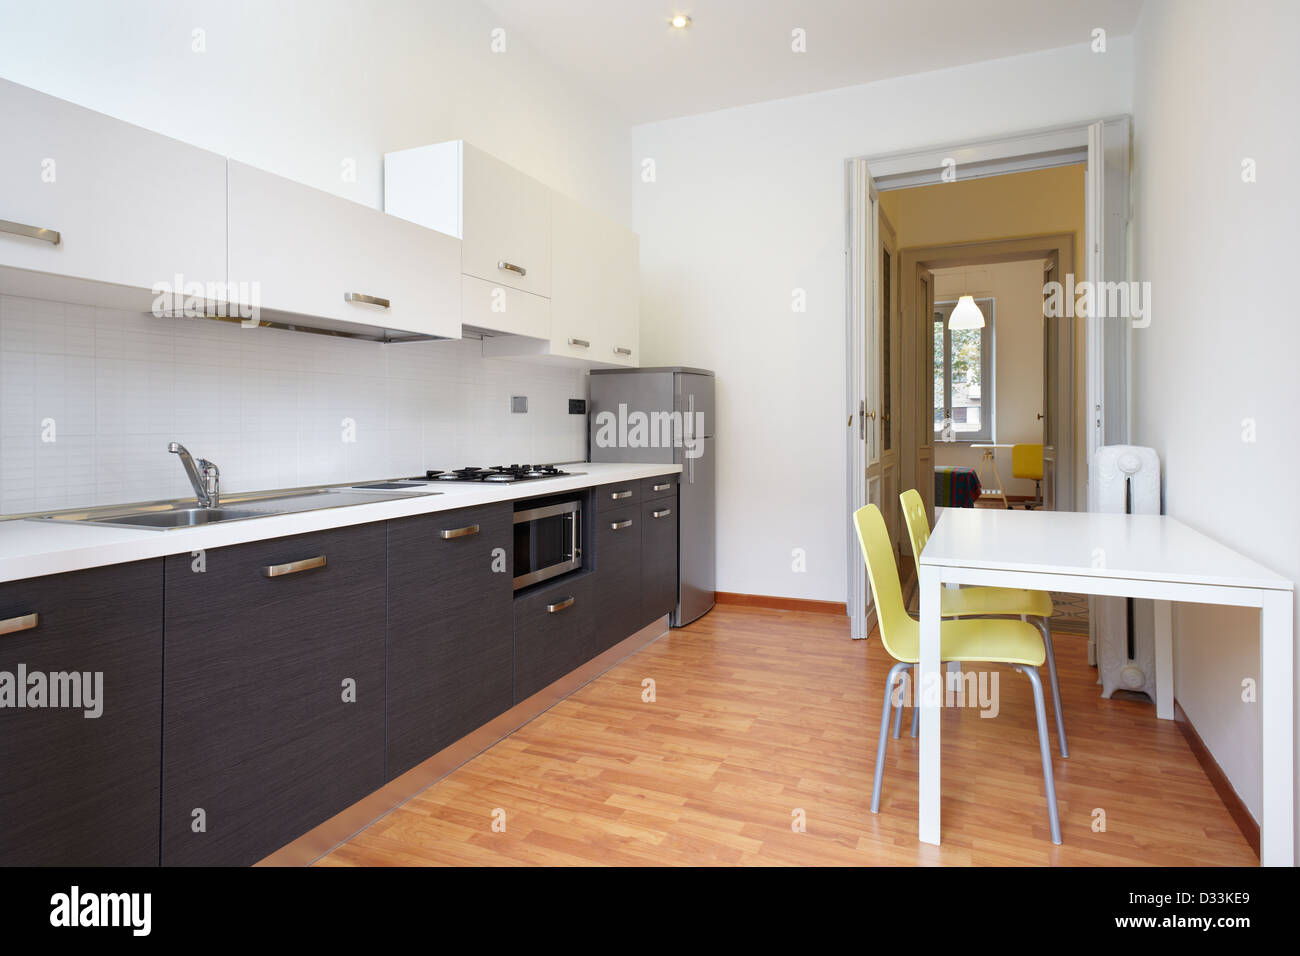 Kitchen in new modern apartment Stock Photo